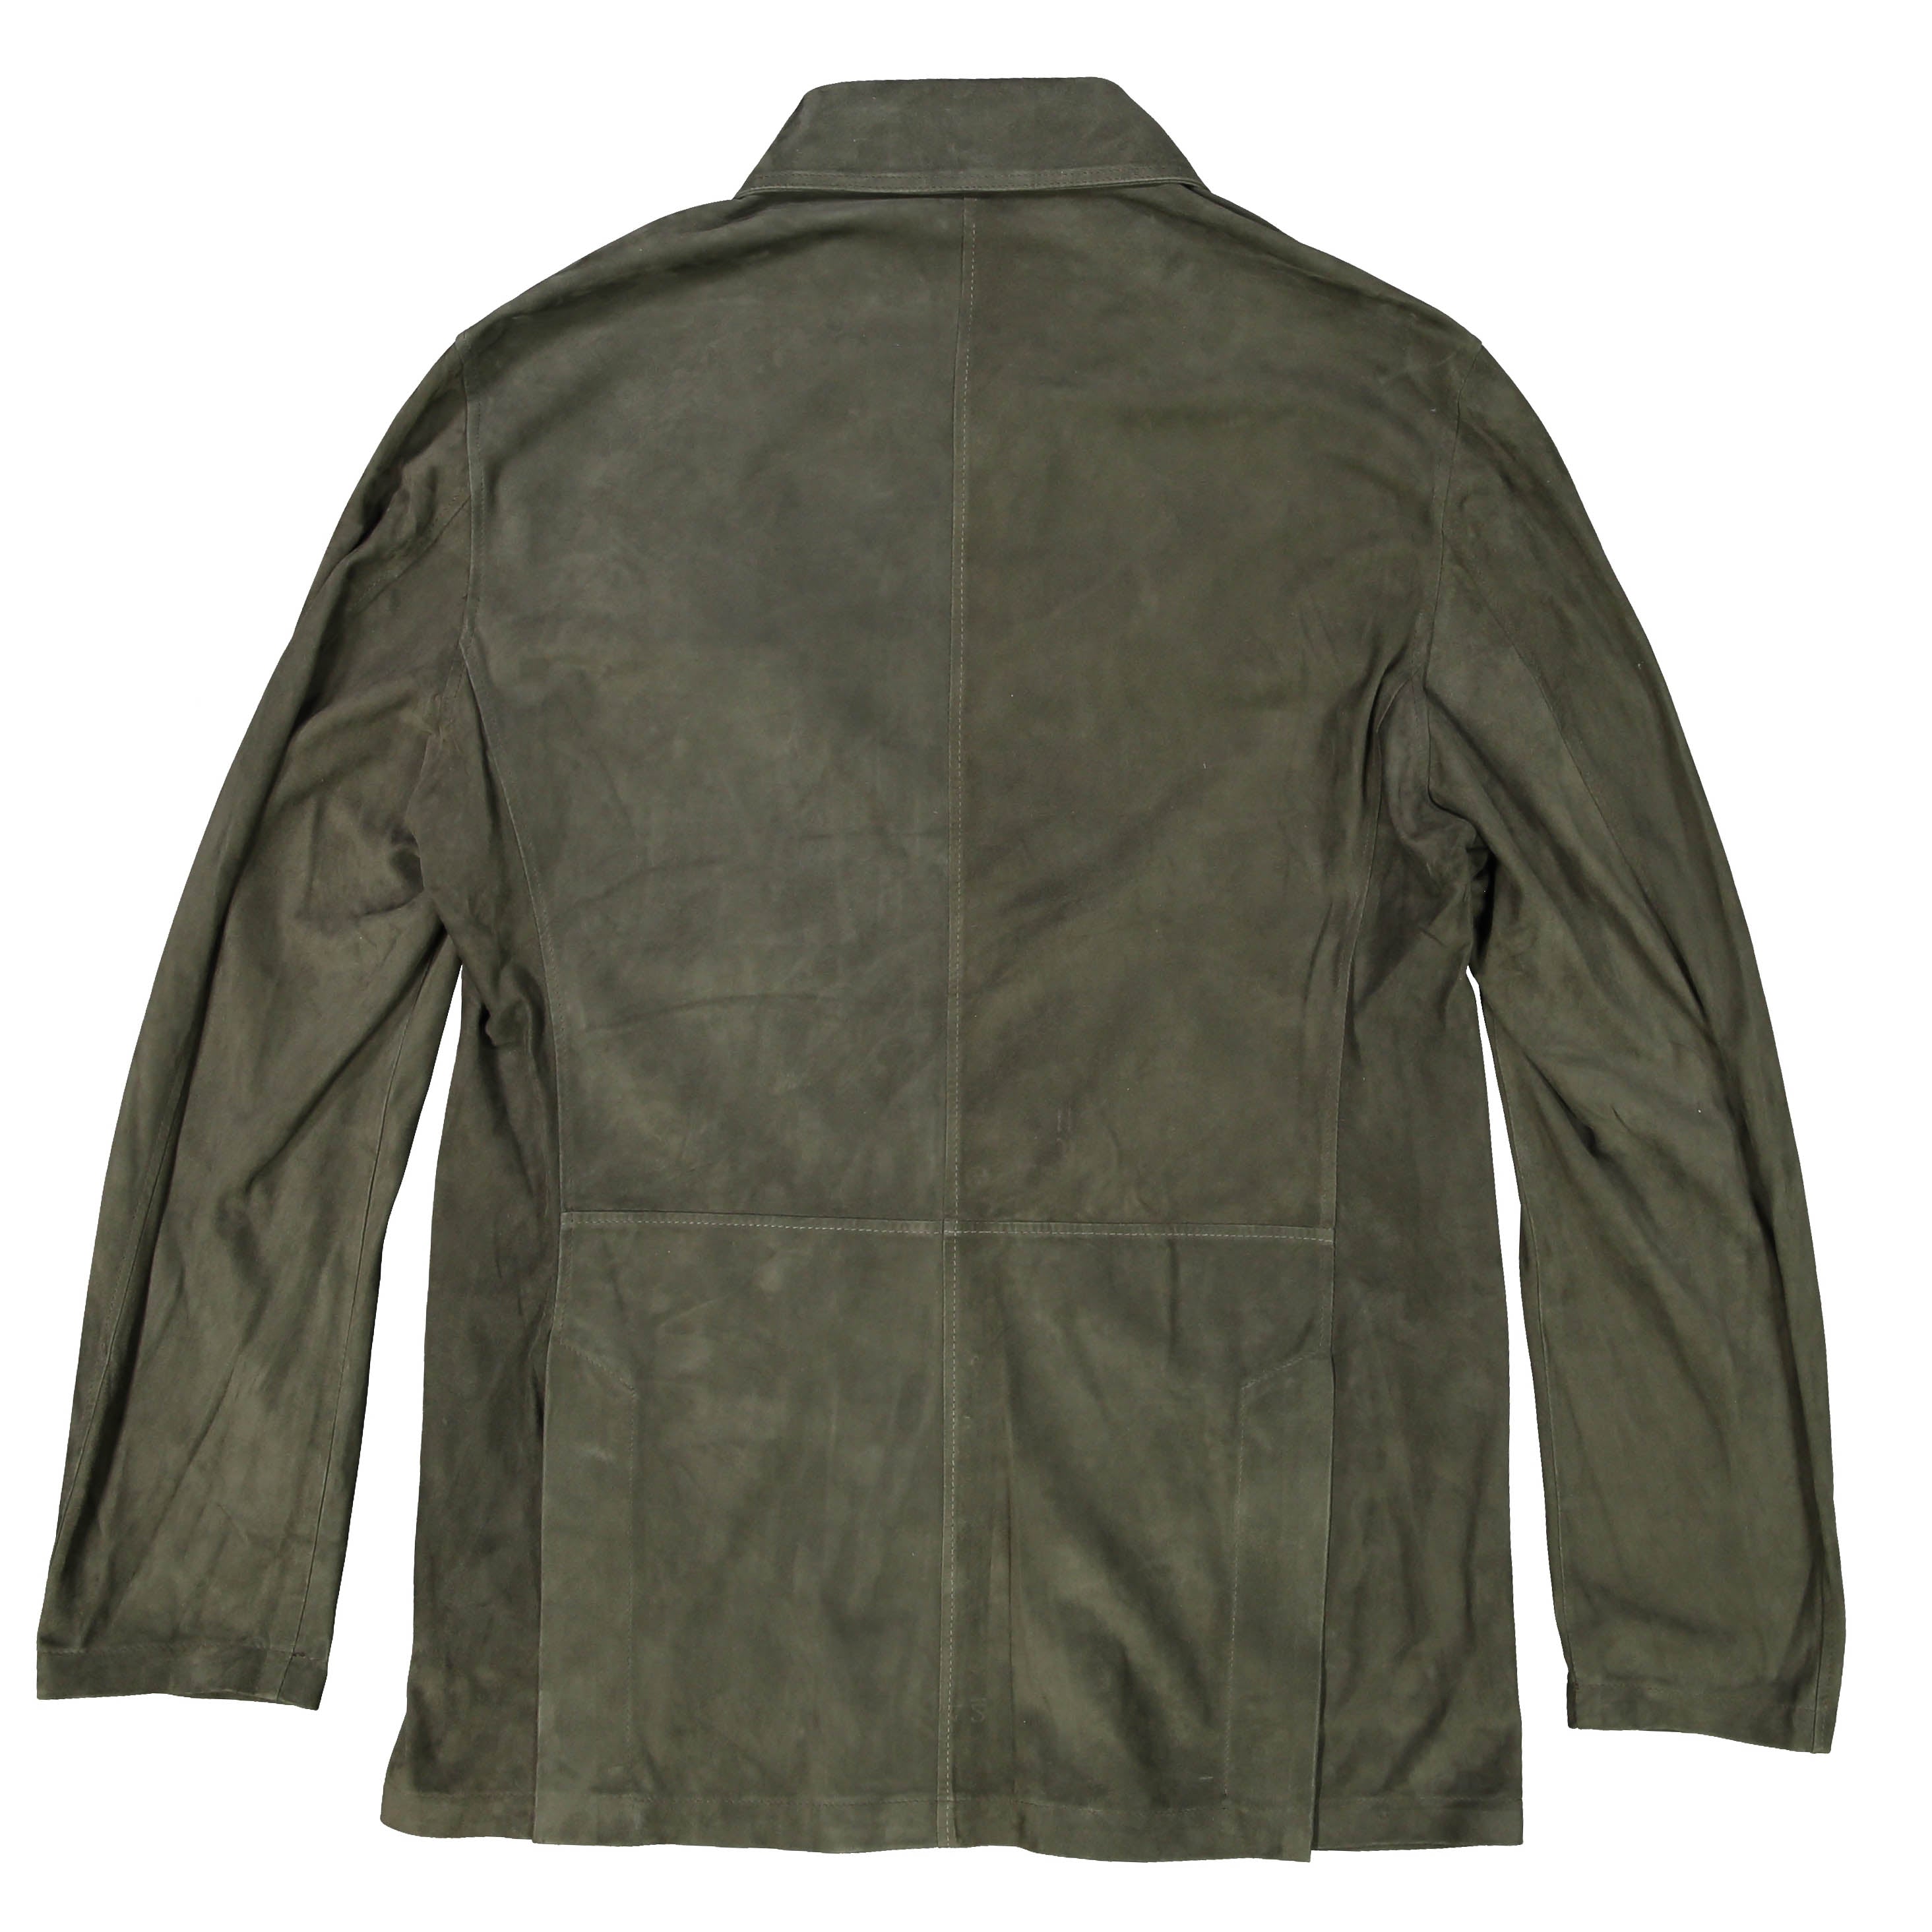 Olive Lightweight Suede Field Jacket